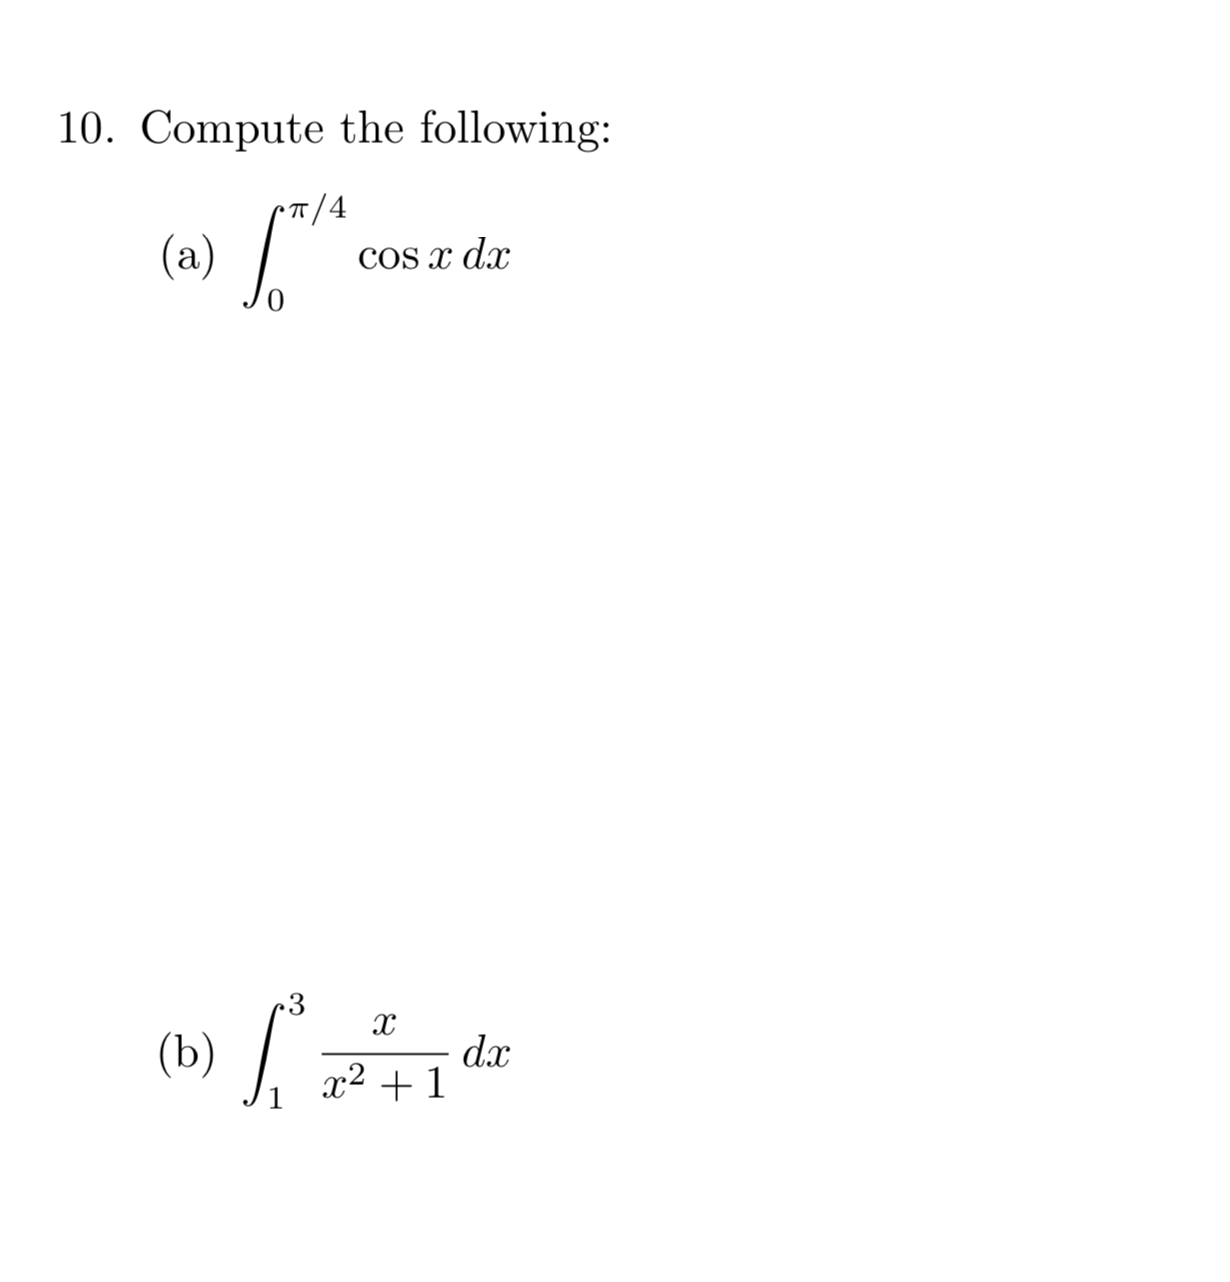 10. Compute the following:
»TT/4
(a)
COS dx
3
(b)
dax
